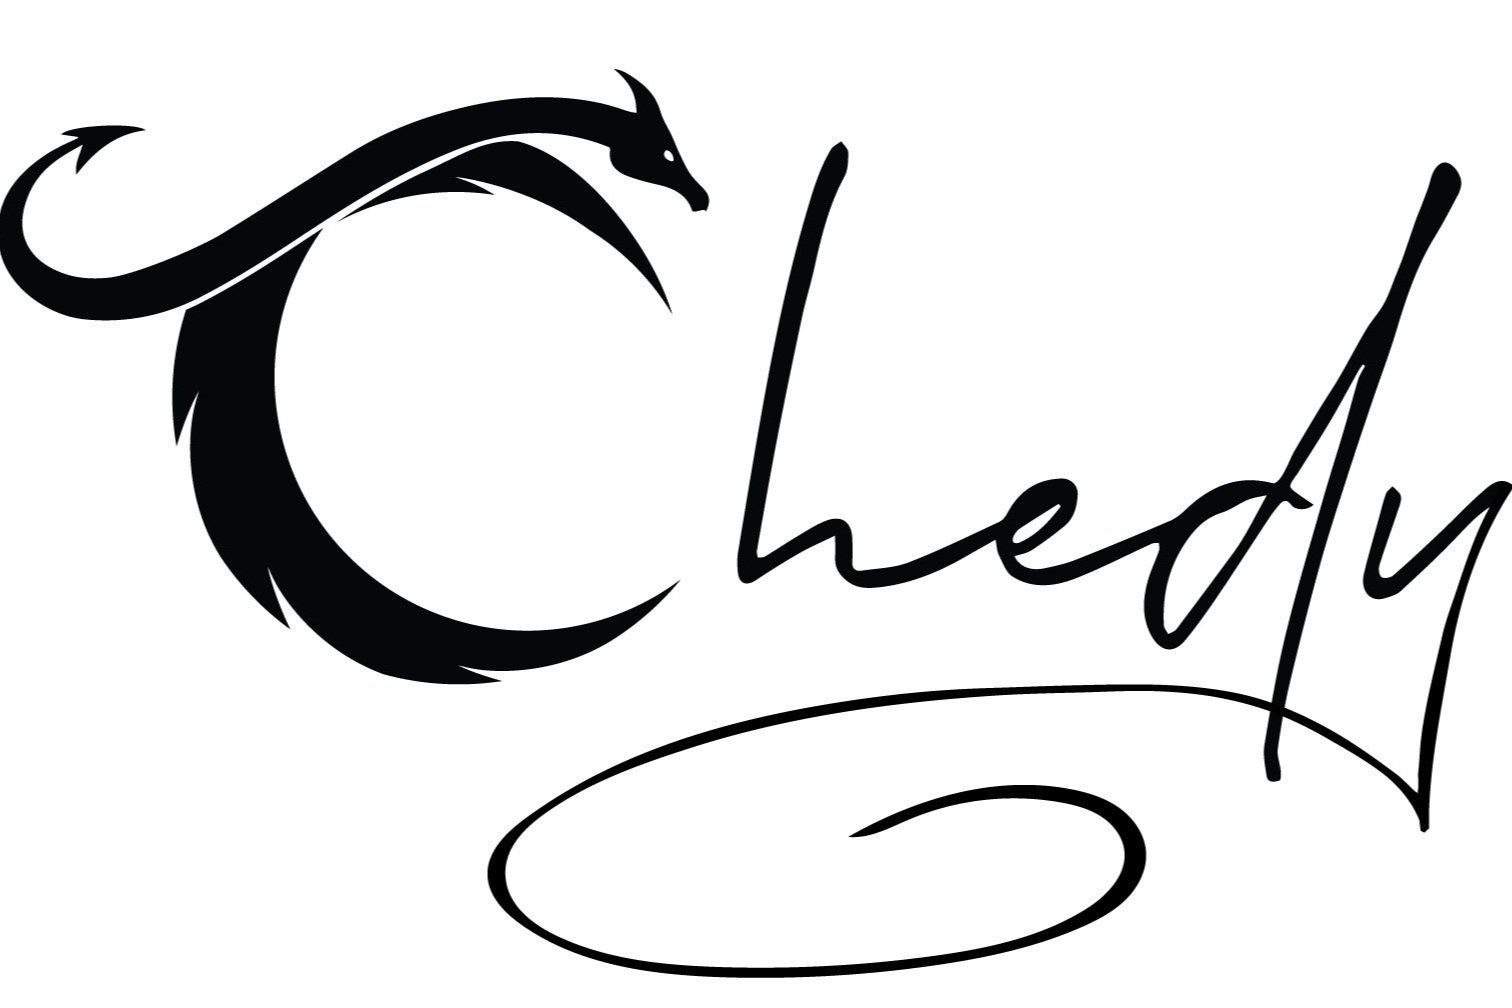 Chedy+Hampson+-+Signature+Logo.jpg